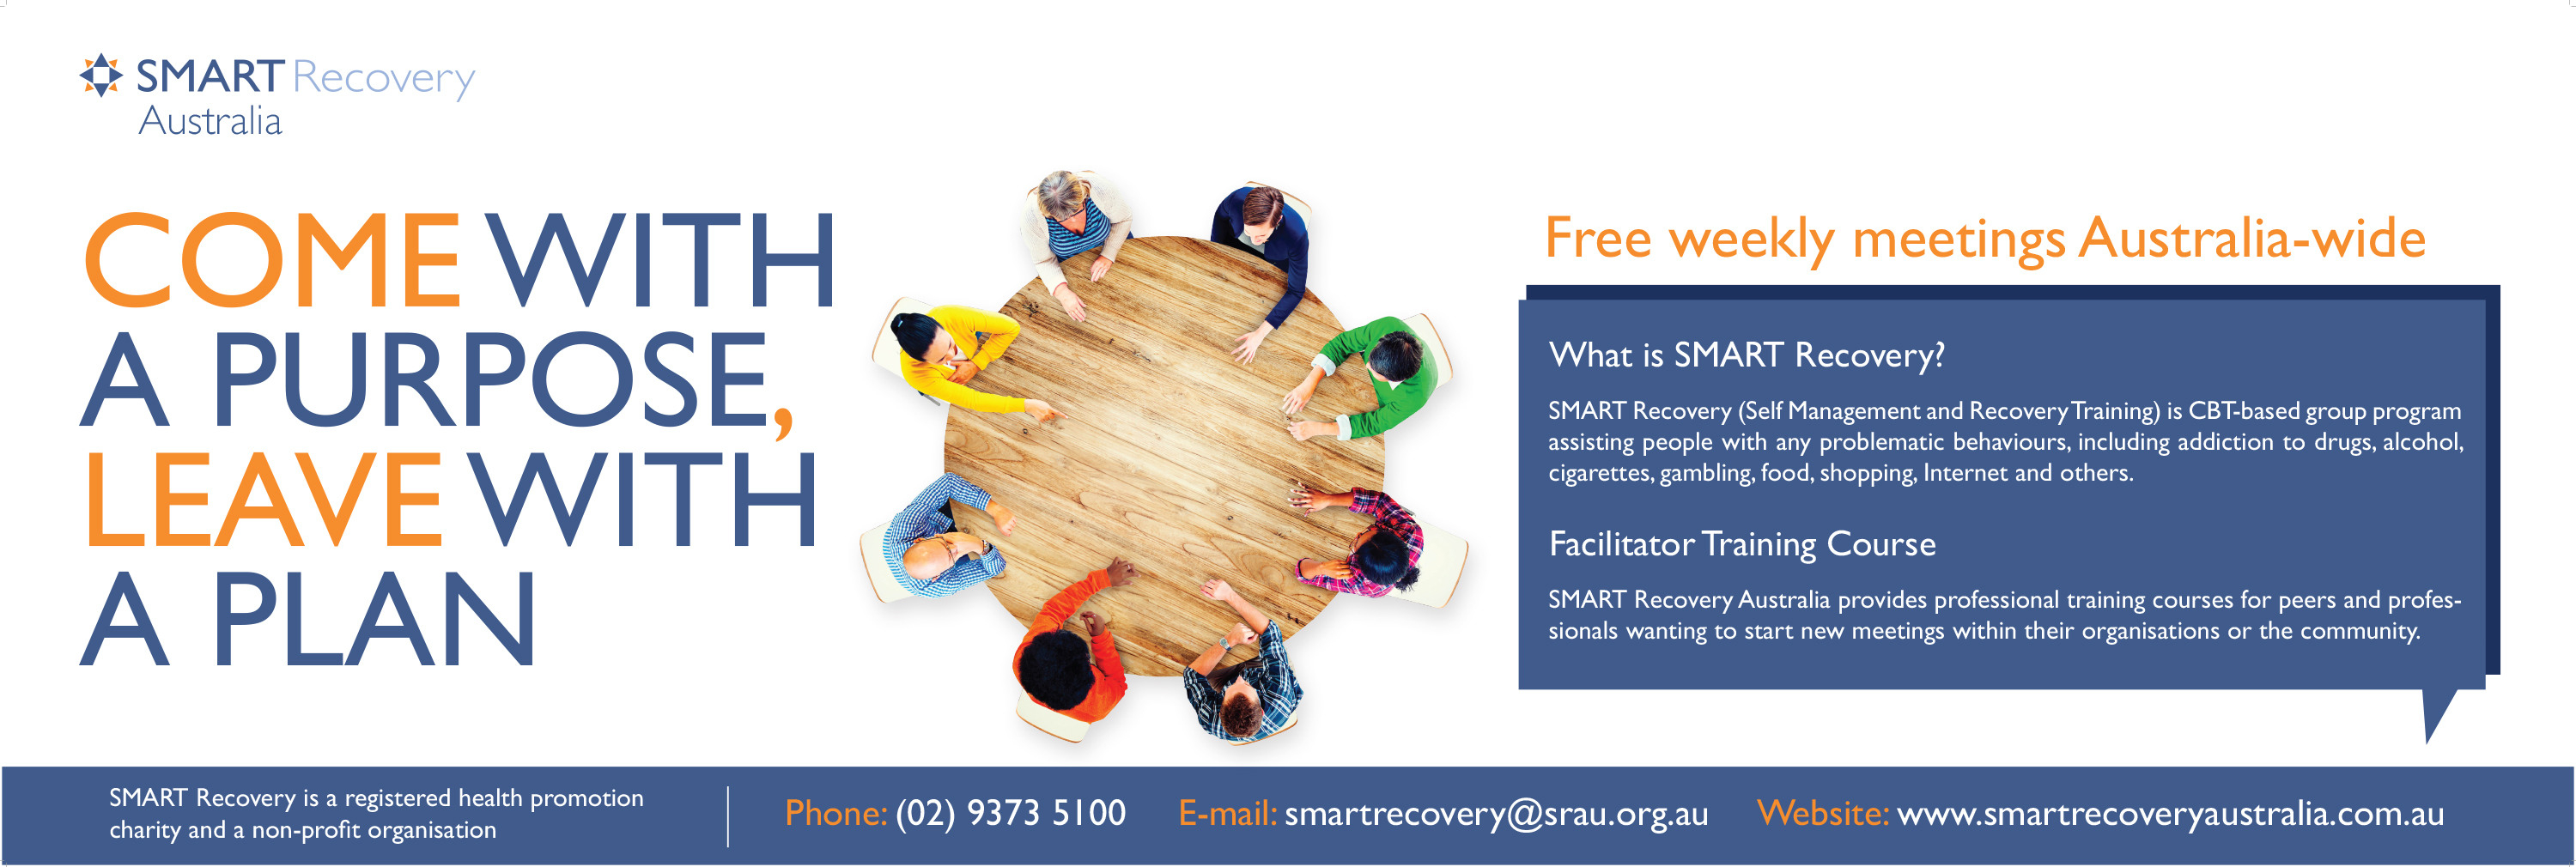 Smartrecoverybannerpromo  Smart Recovery Australia